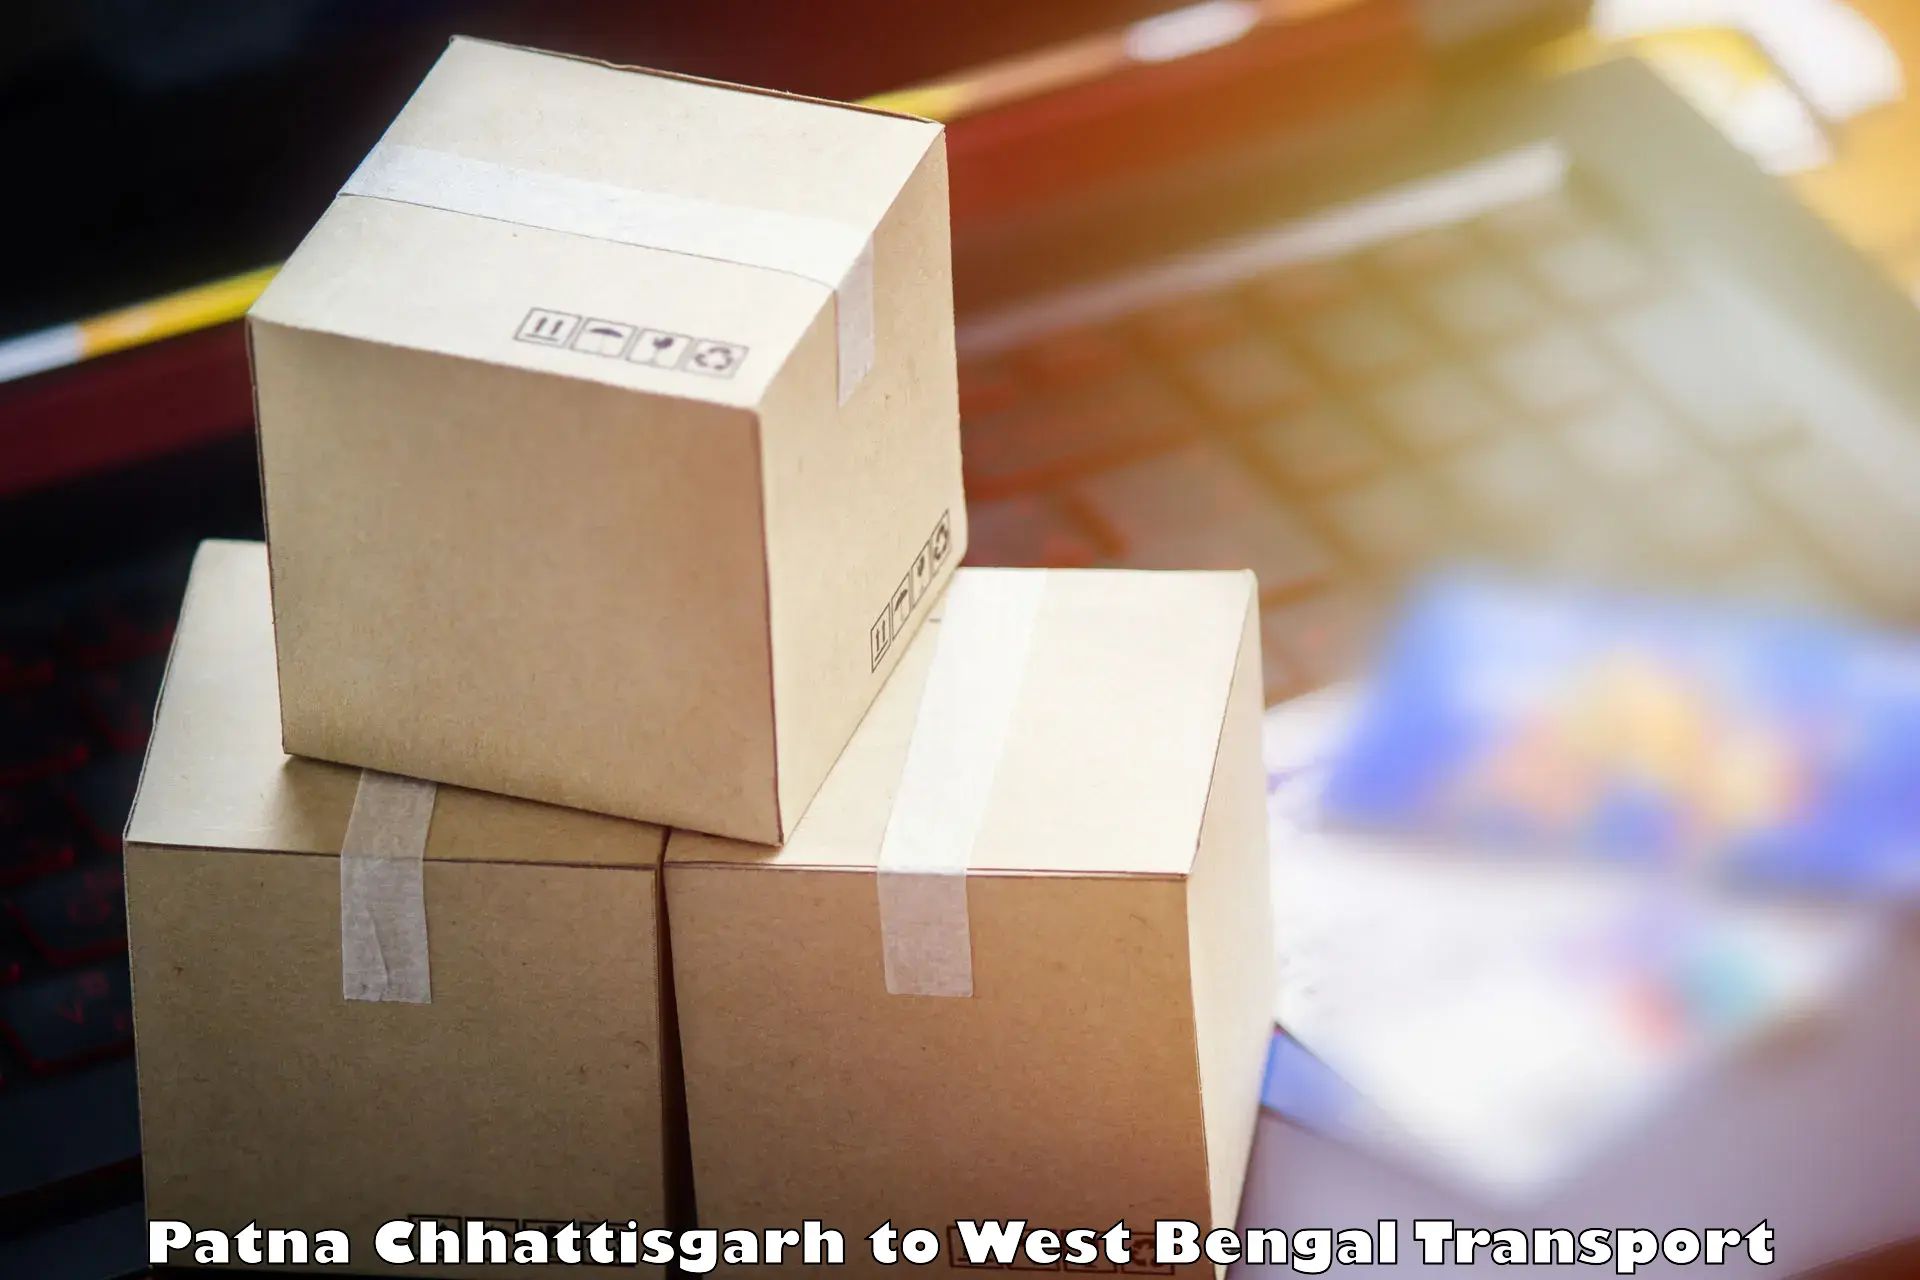 Delivery service Patna Chhattisgarh to Kalyani